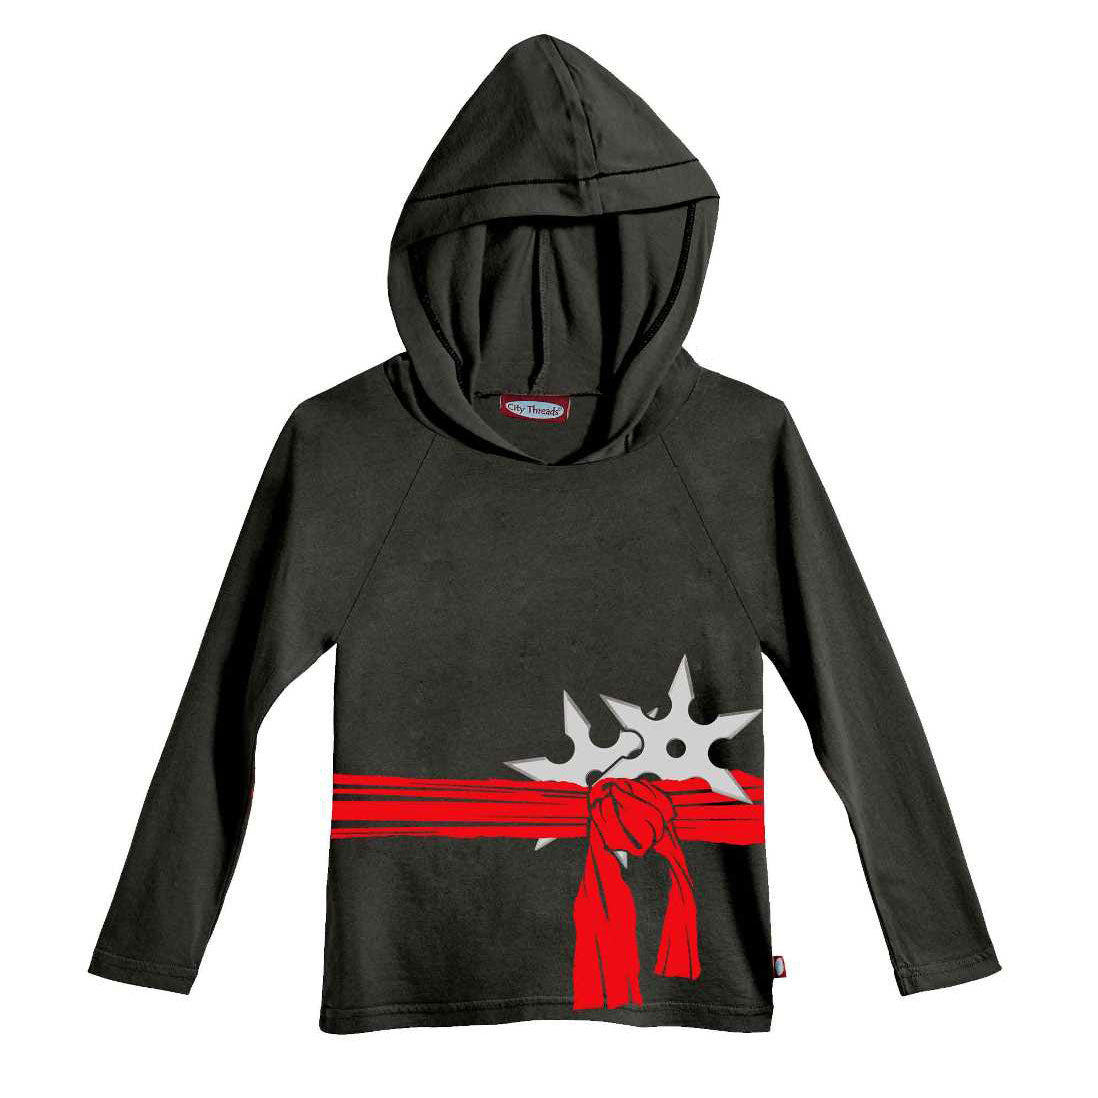 Boys' Ninja Hooded Shirt by City Threads